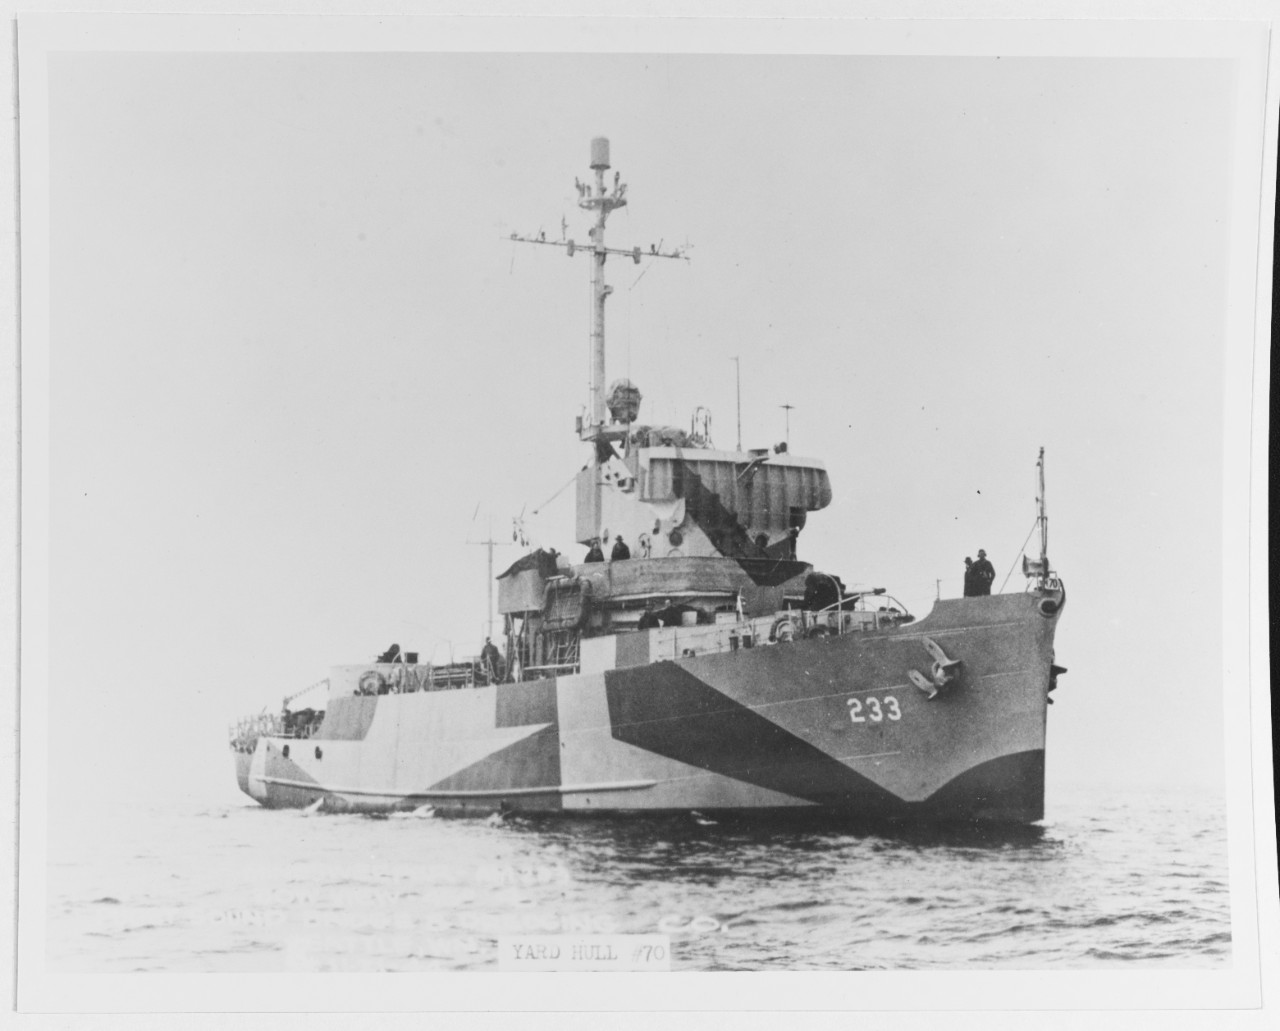 USS FACILITY (AM-233)